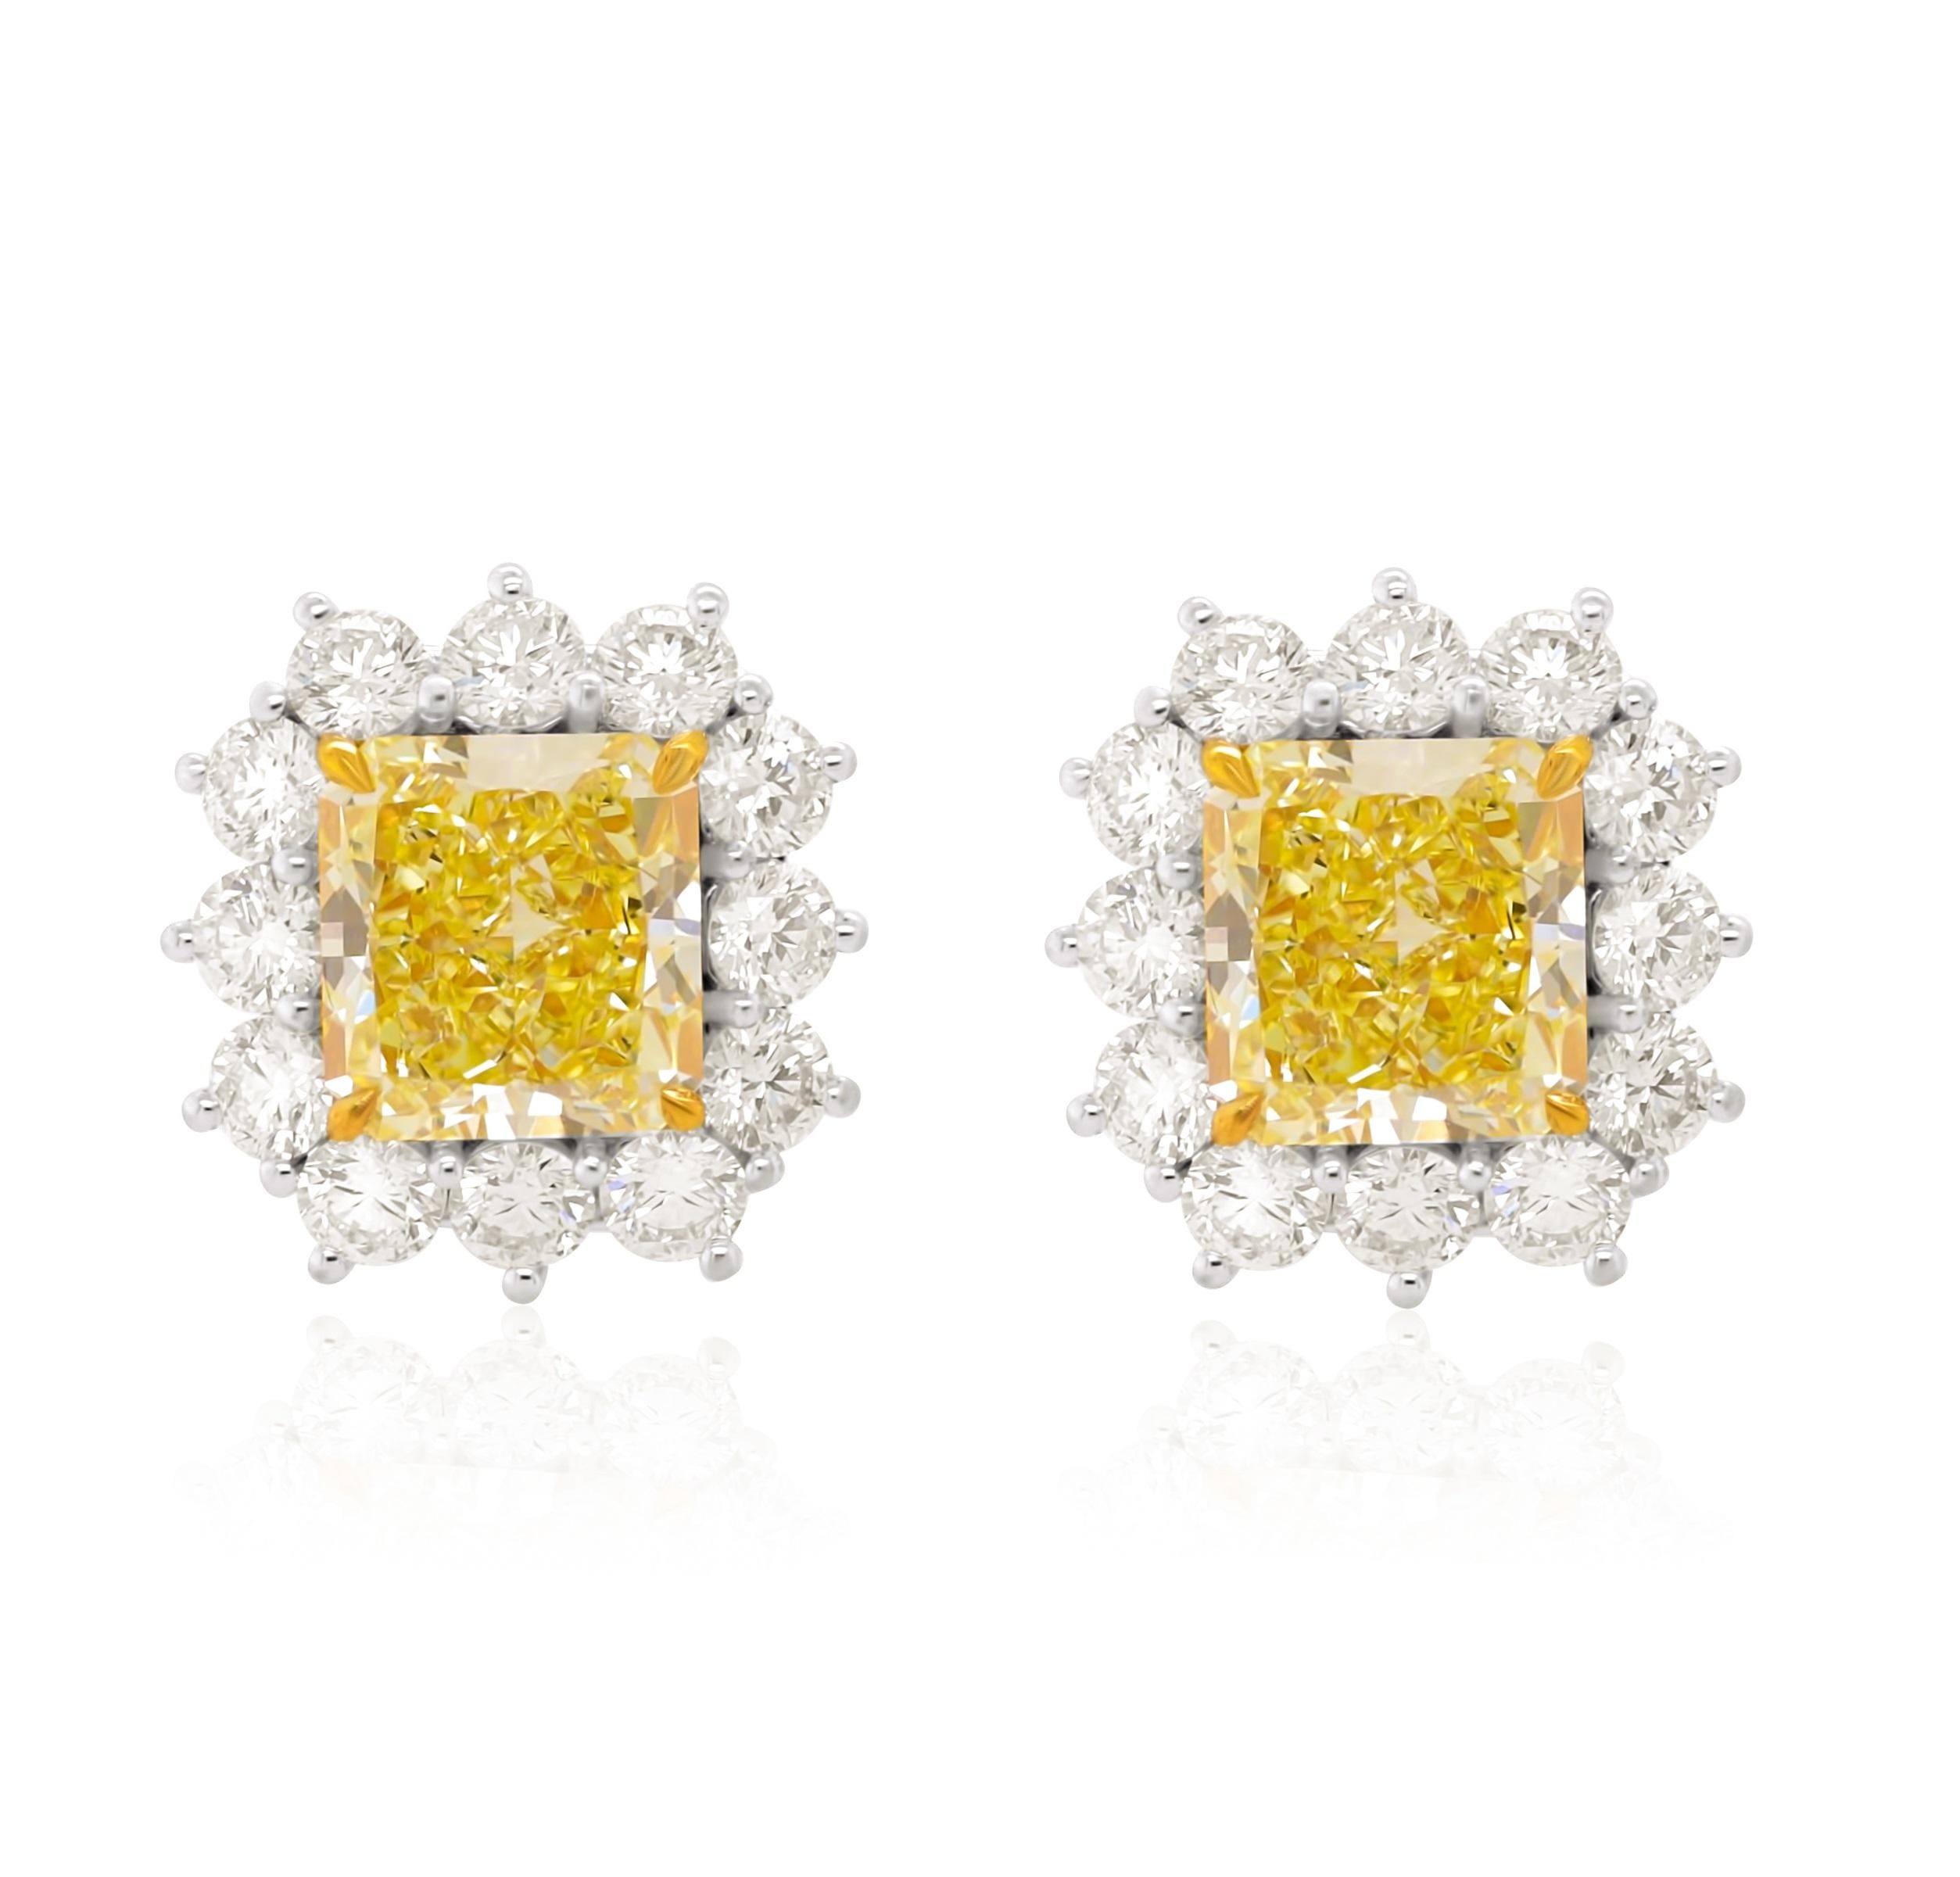 Radiant Cut Diana M. 9.79 Carat Yellow Diamond Stud Earrings For Sale